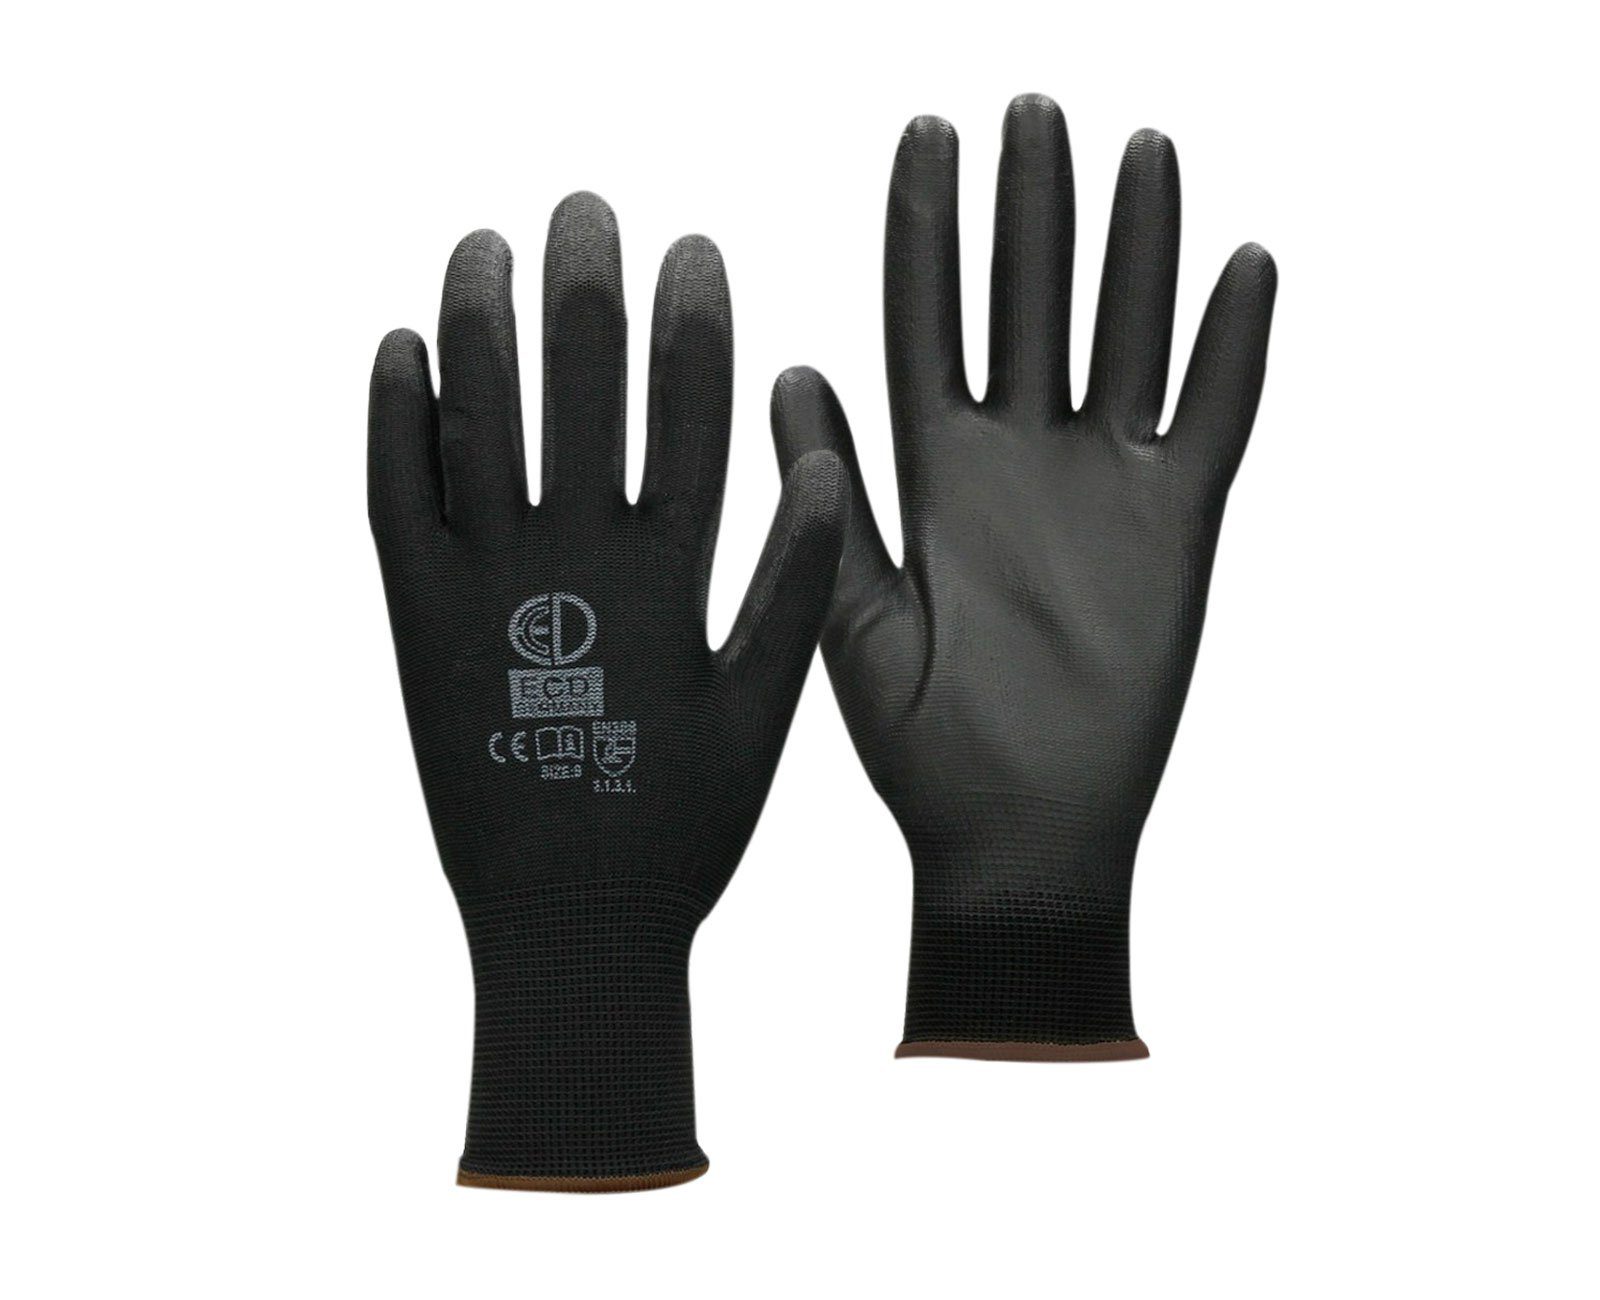 HAGO Arbeitshandschuhe Arbeitshandschuhe, Industrie und Mechaniker-Handschuh, Verbesserter schwarz | Handschuhe